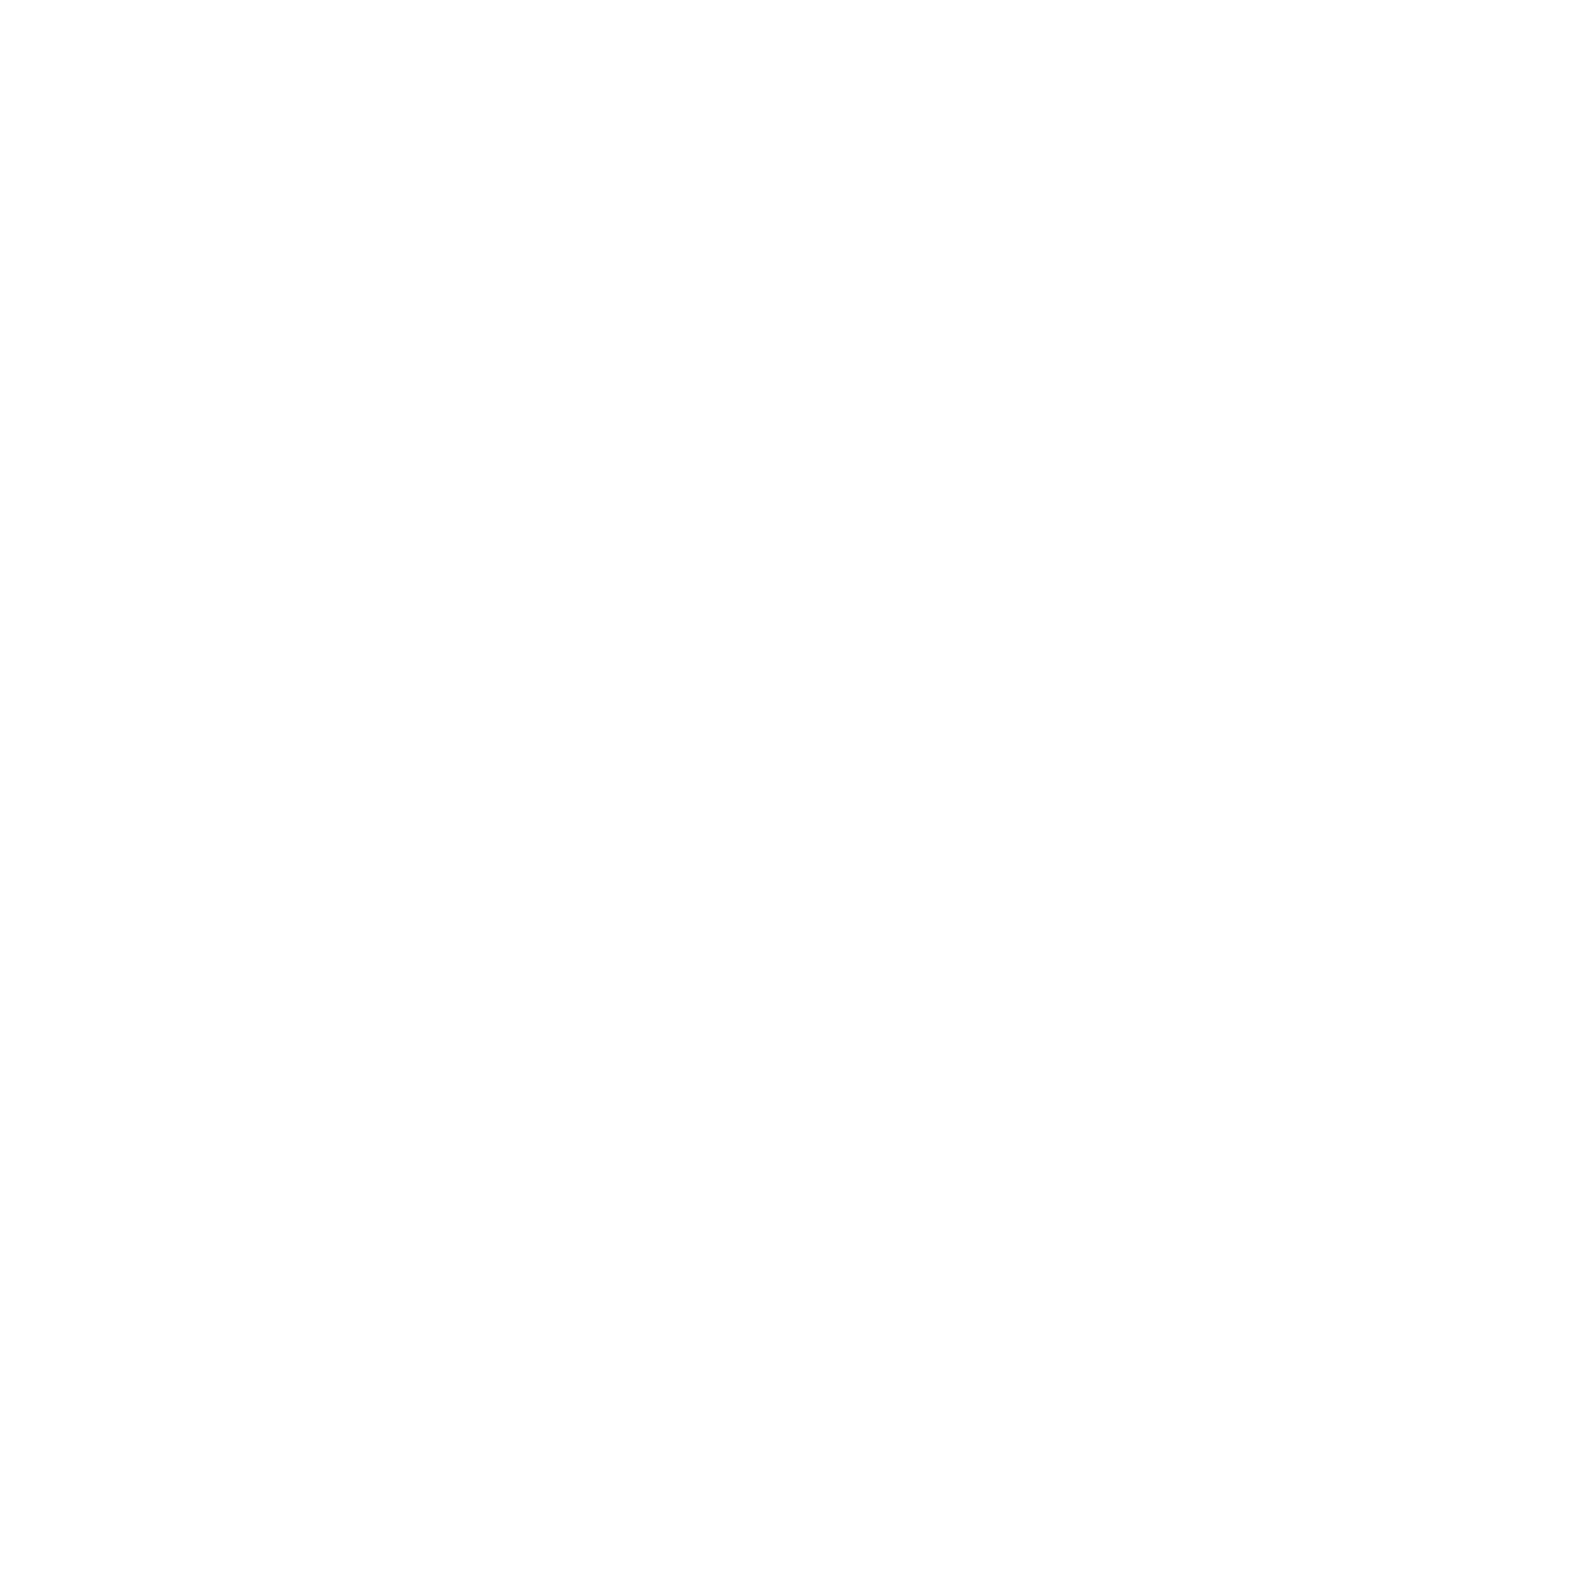 Quaker Houghton logo for dark backgrounds (transparent PNG)